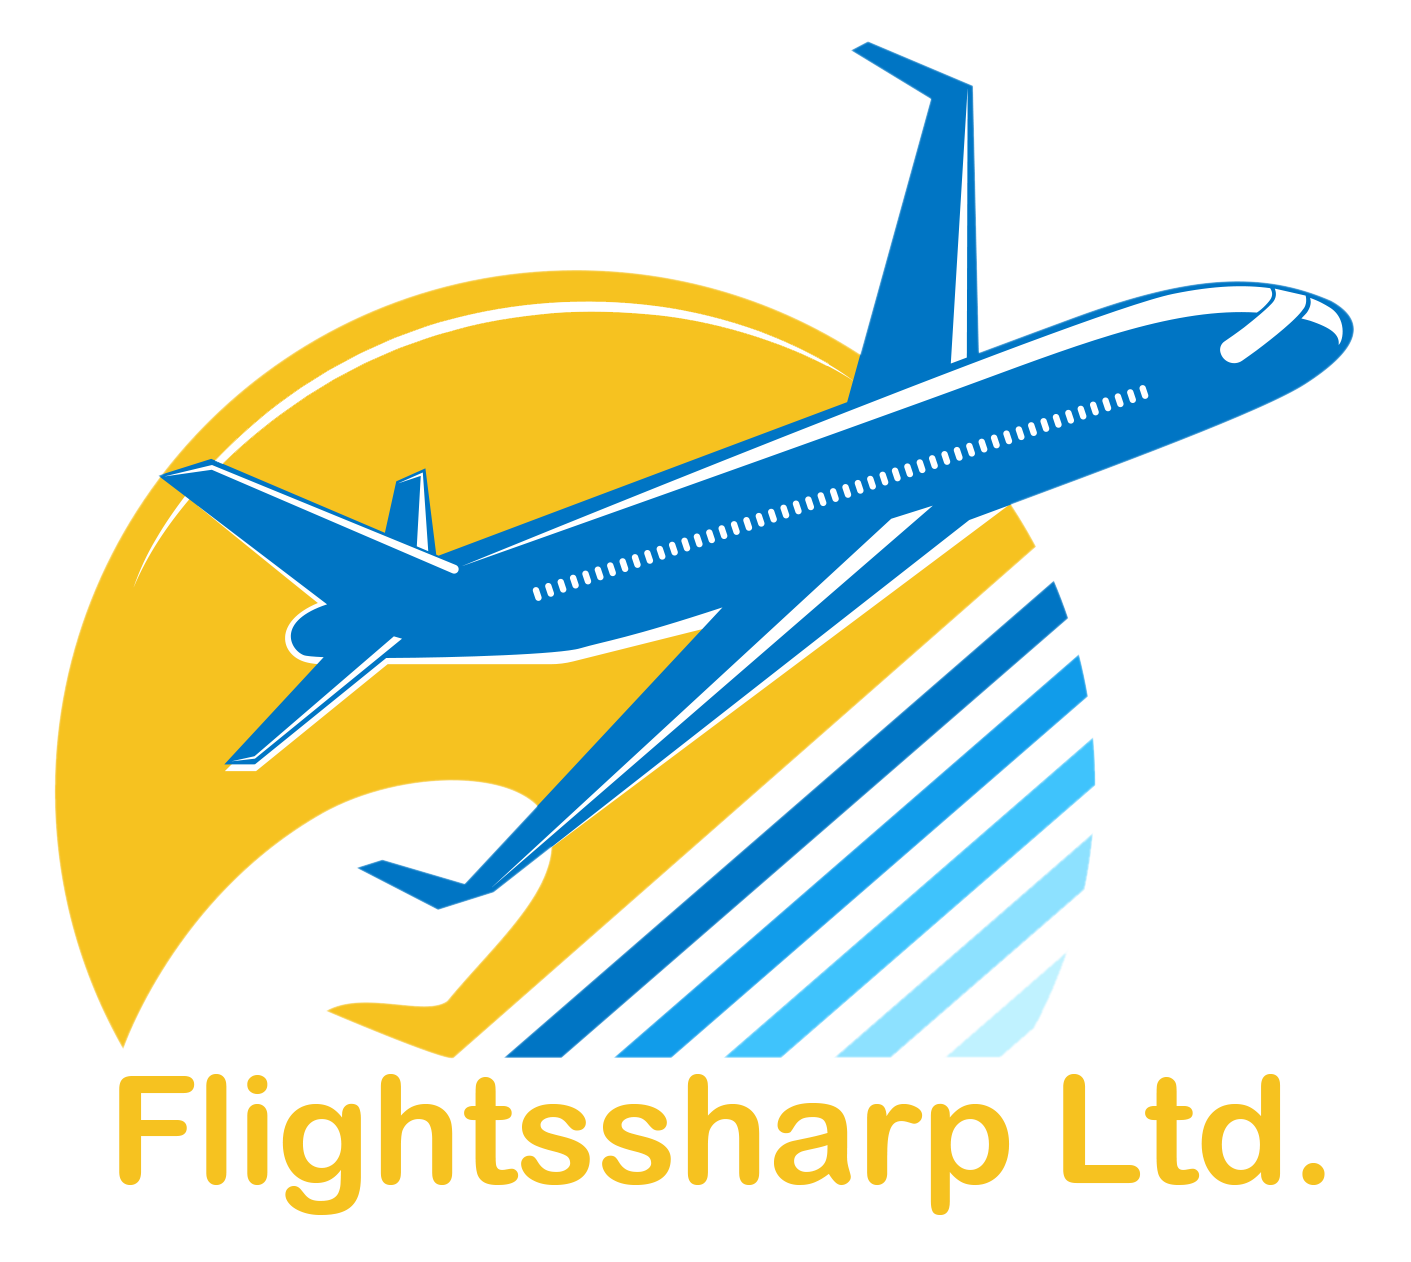 Flightssharp